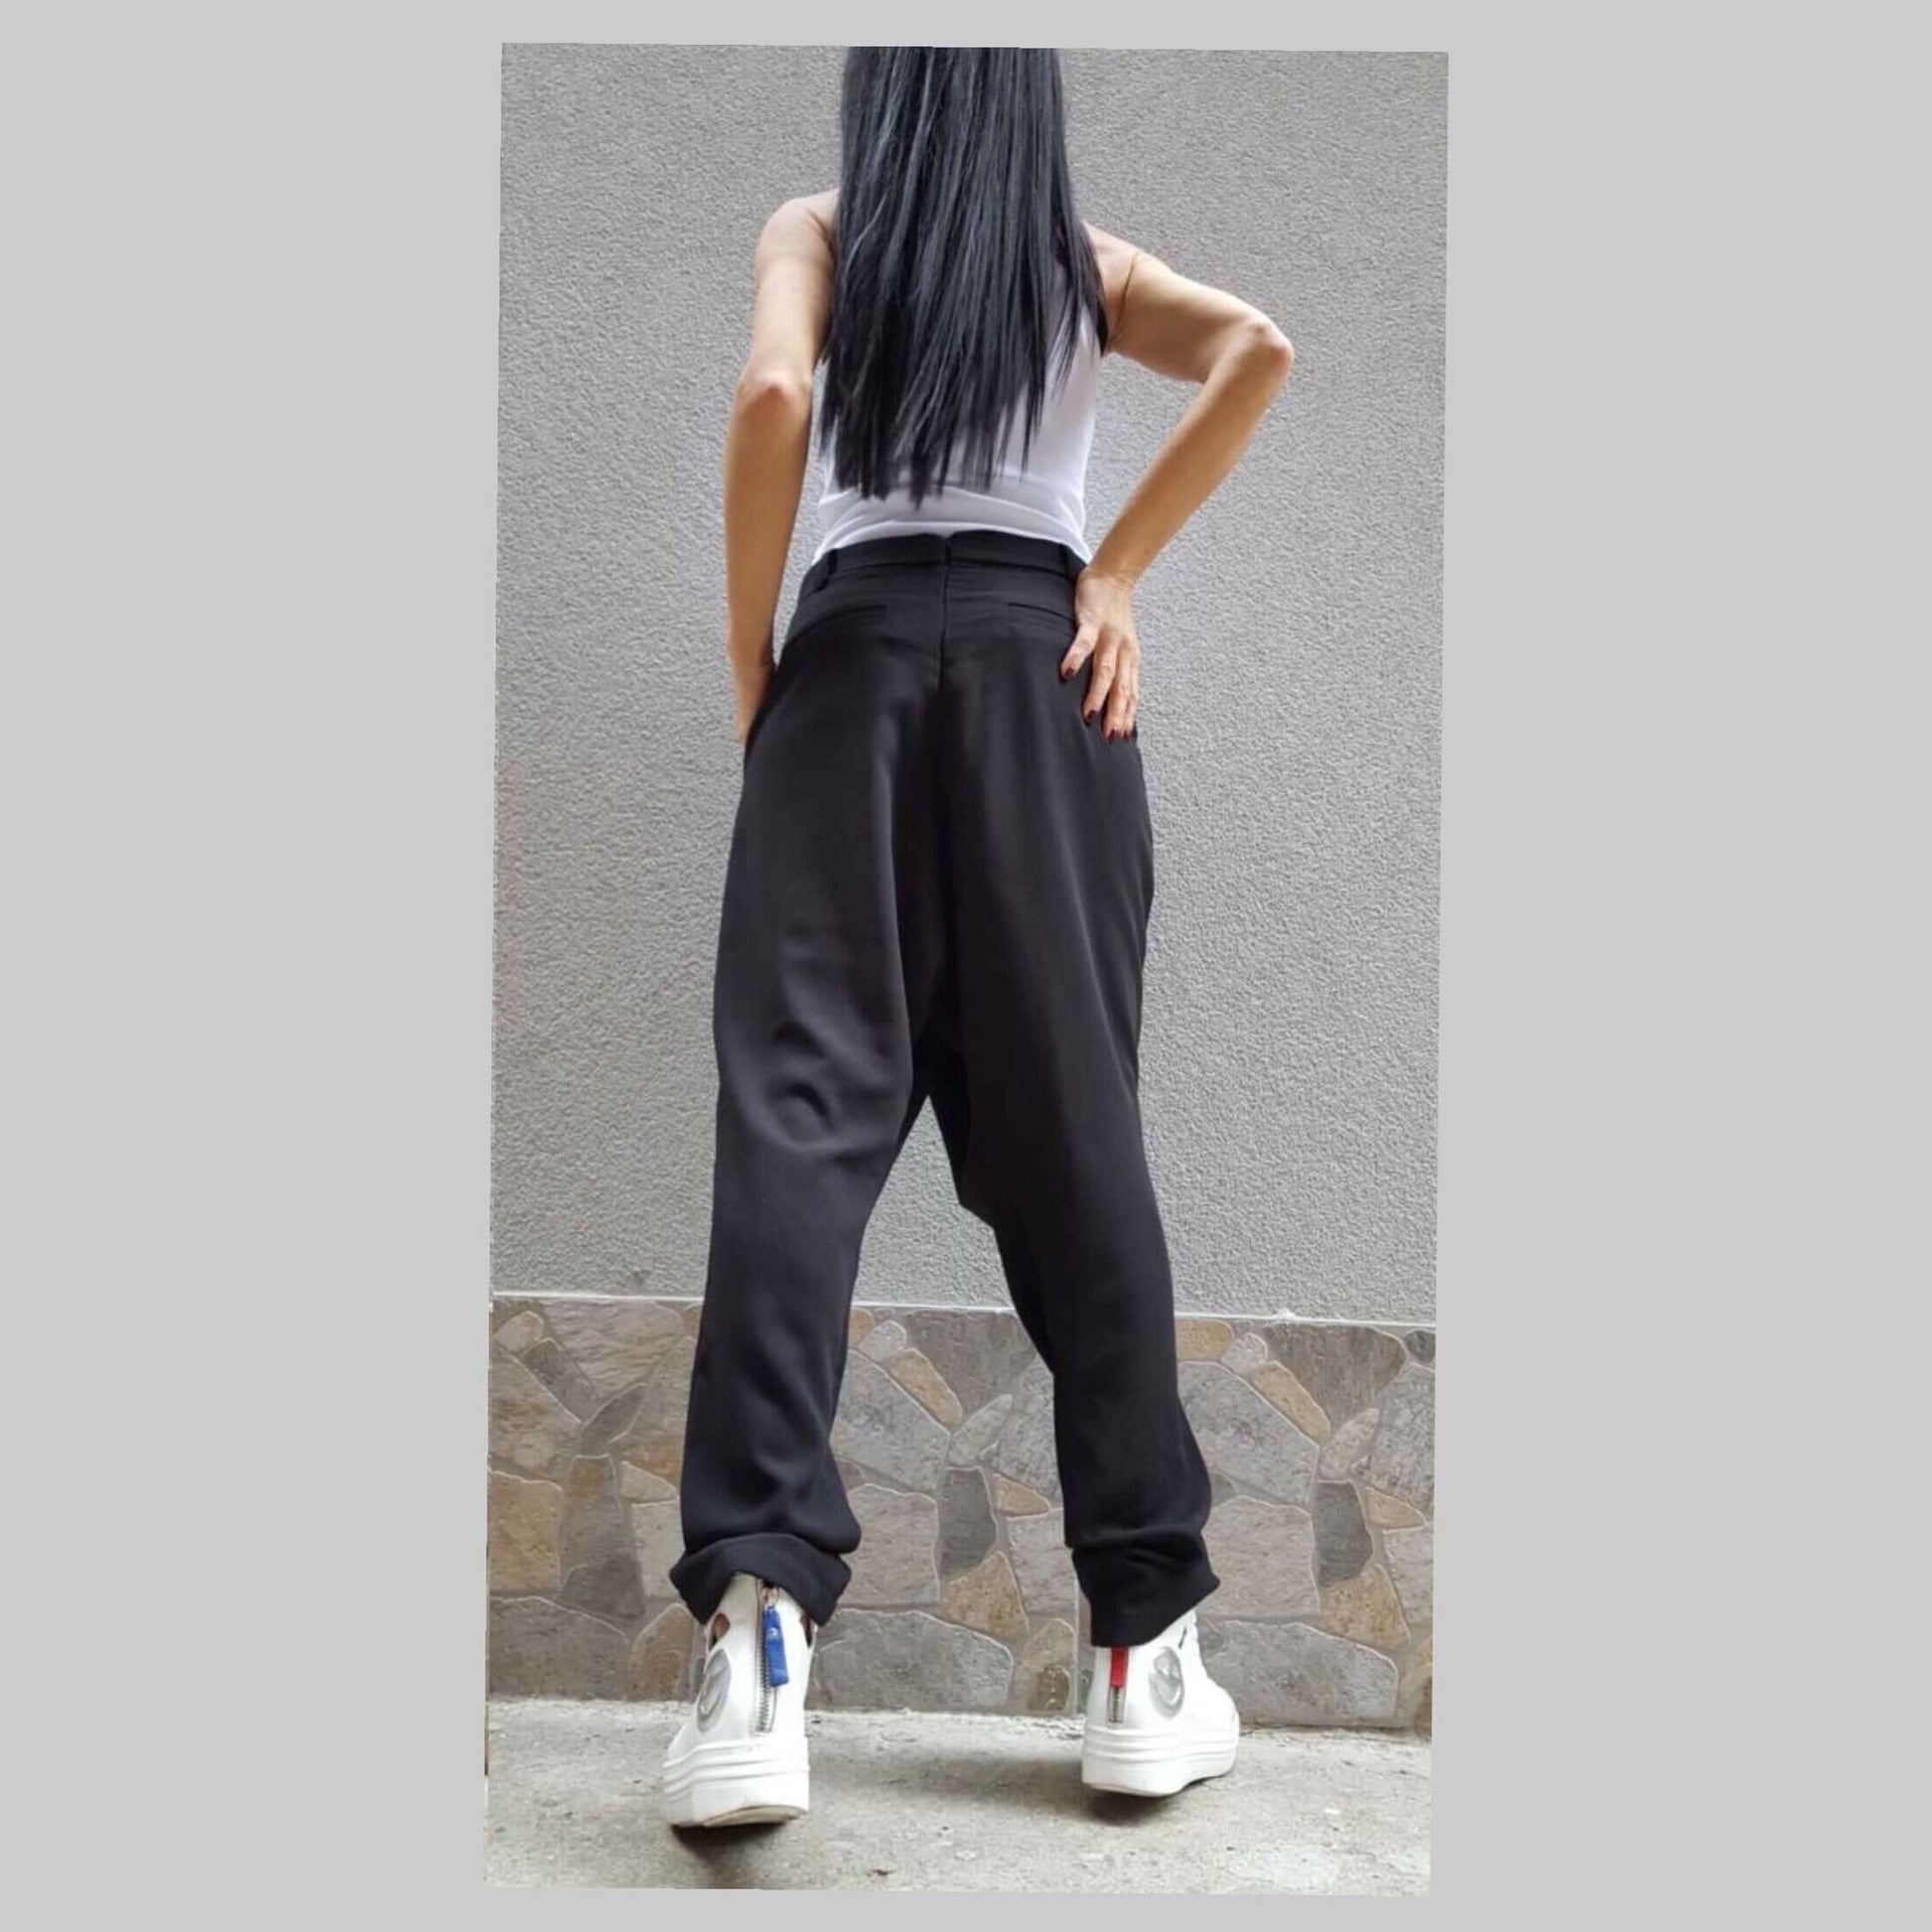 Asymmetric  Black Pants - Handmade clothing from AngelBySilvia - Top Designer Brands 